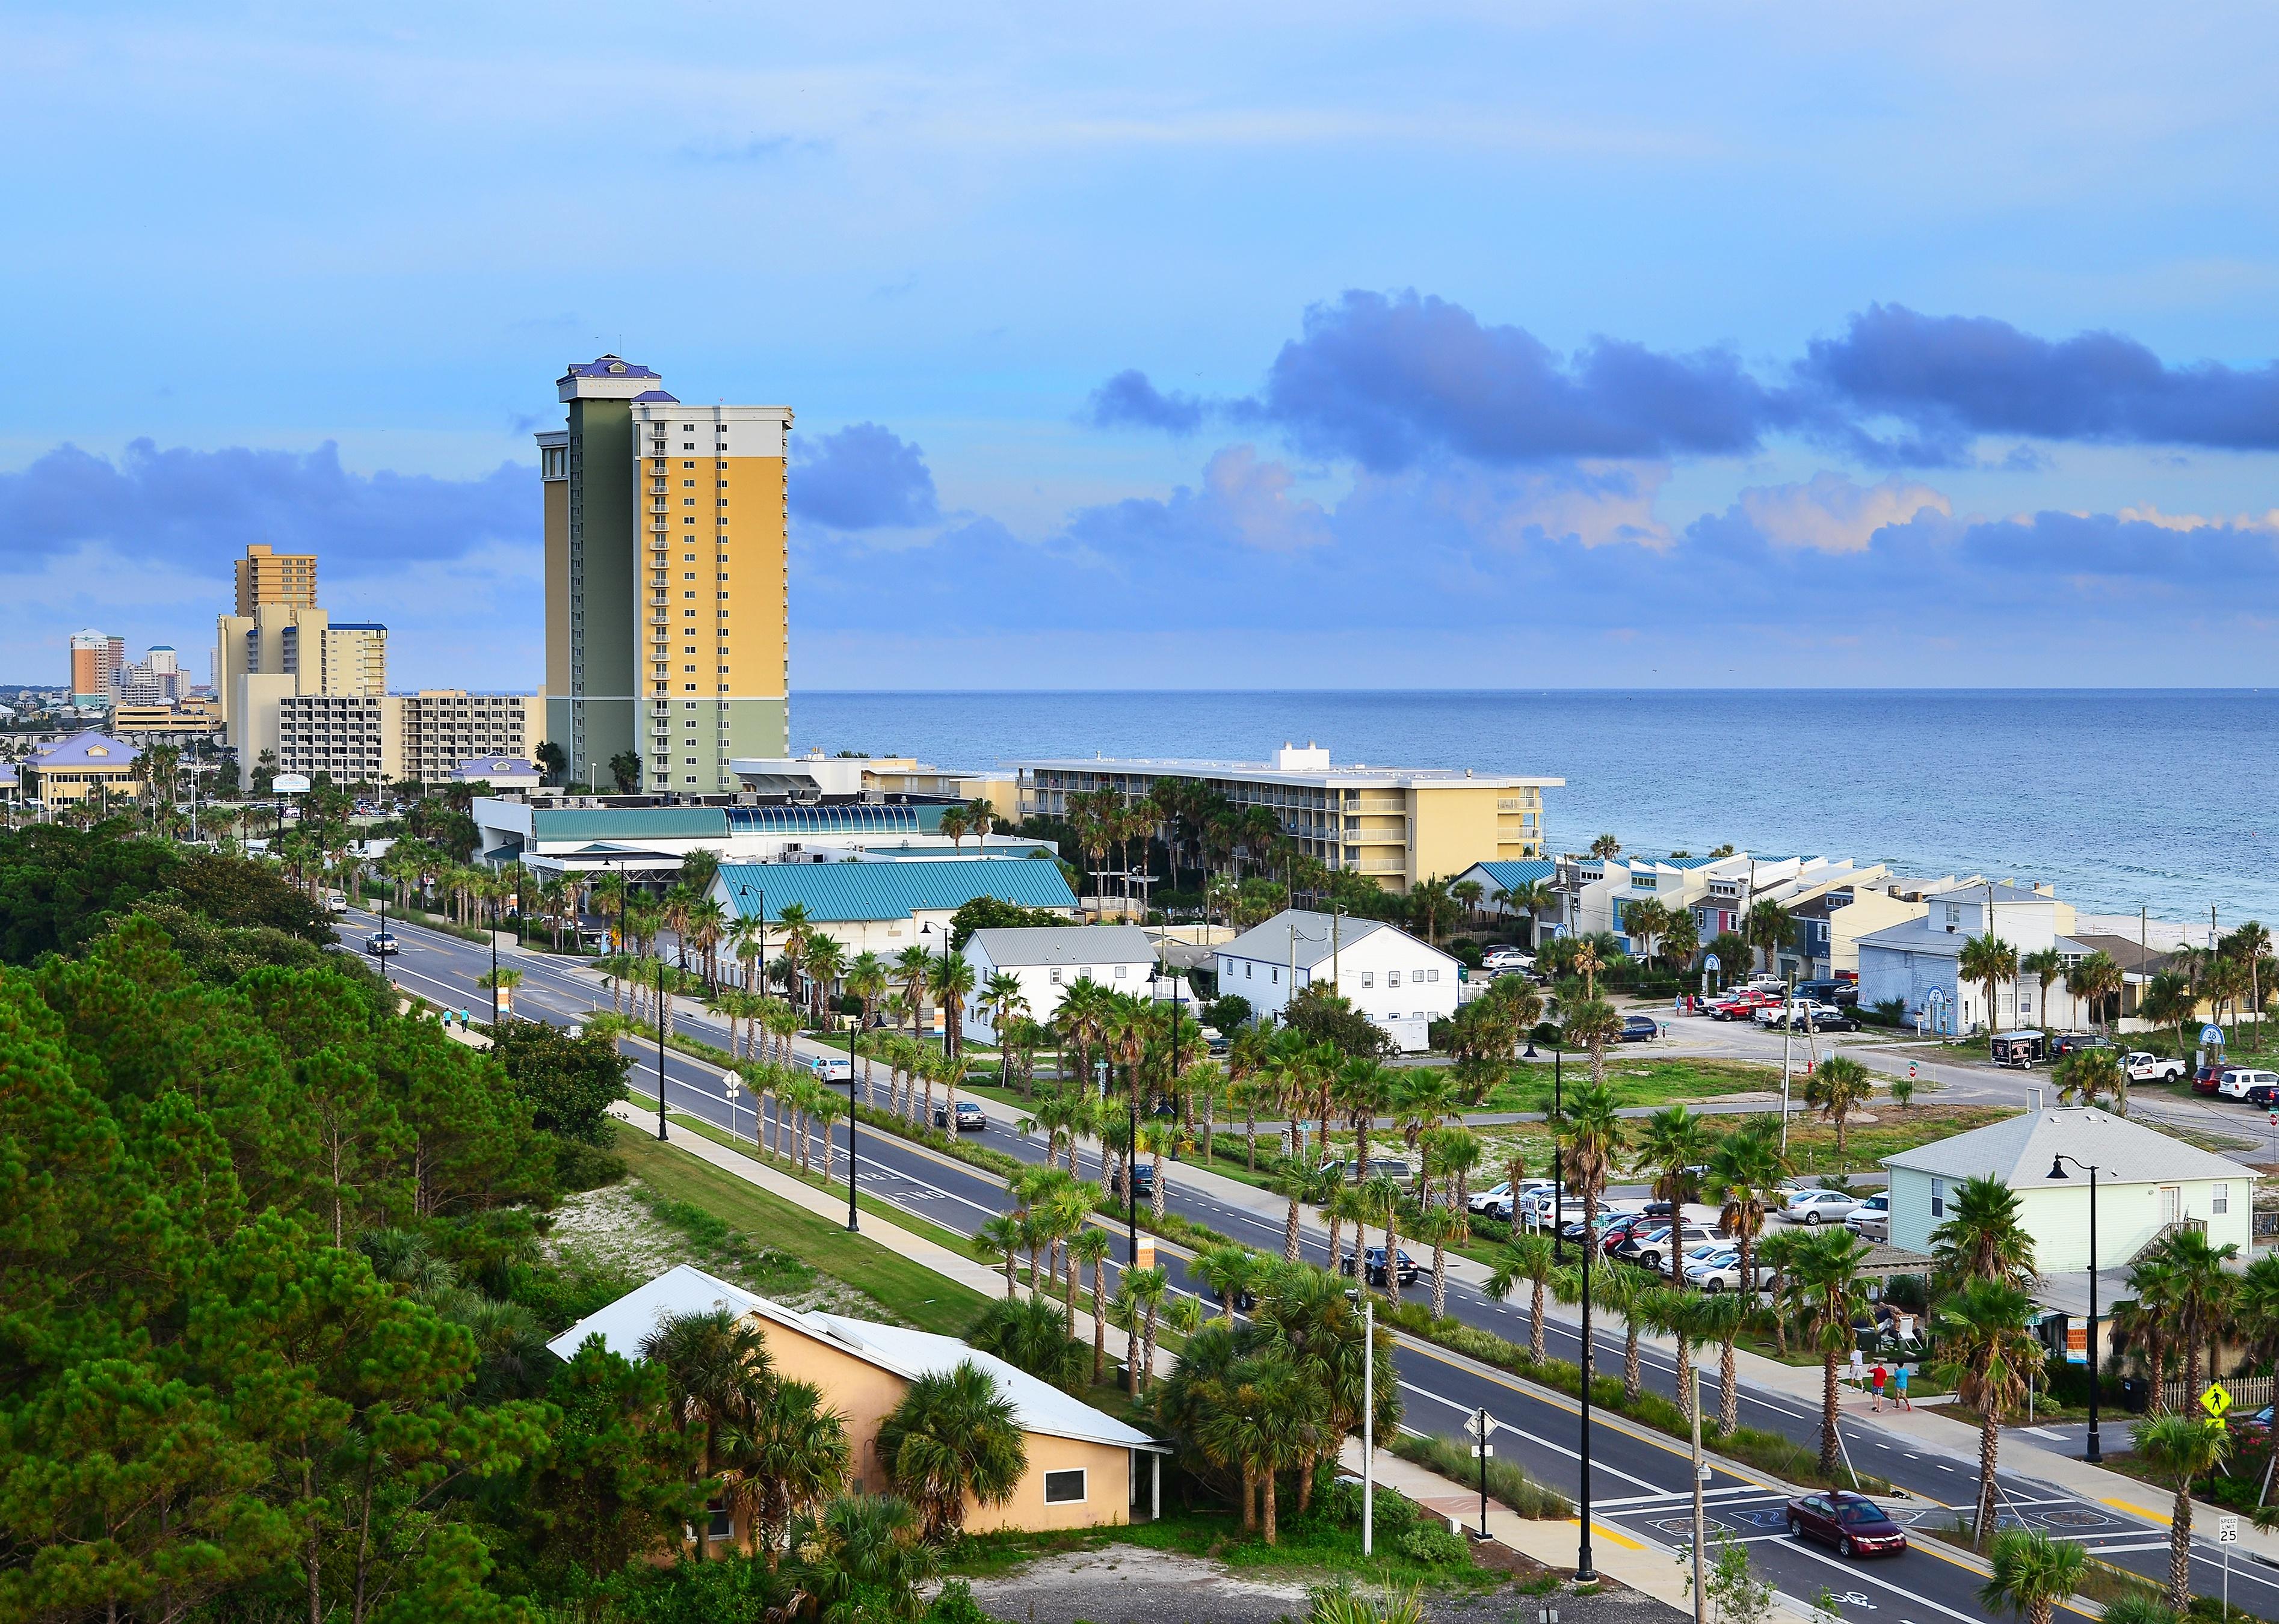 Cityscape image of Panama City Beach